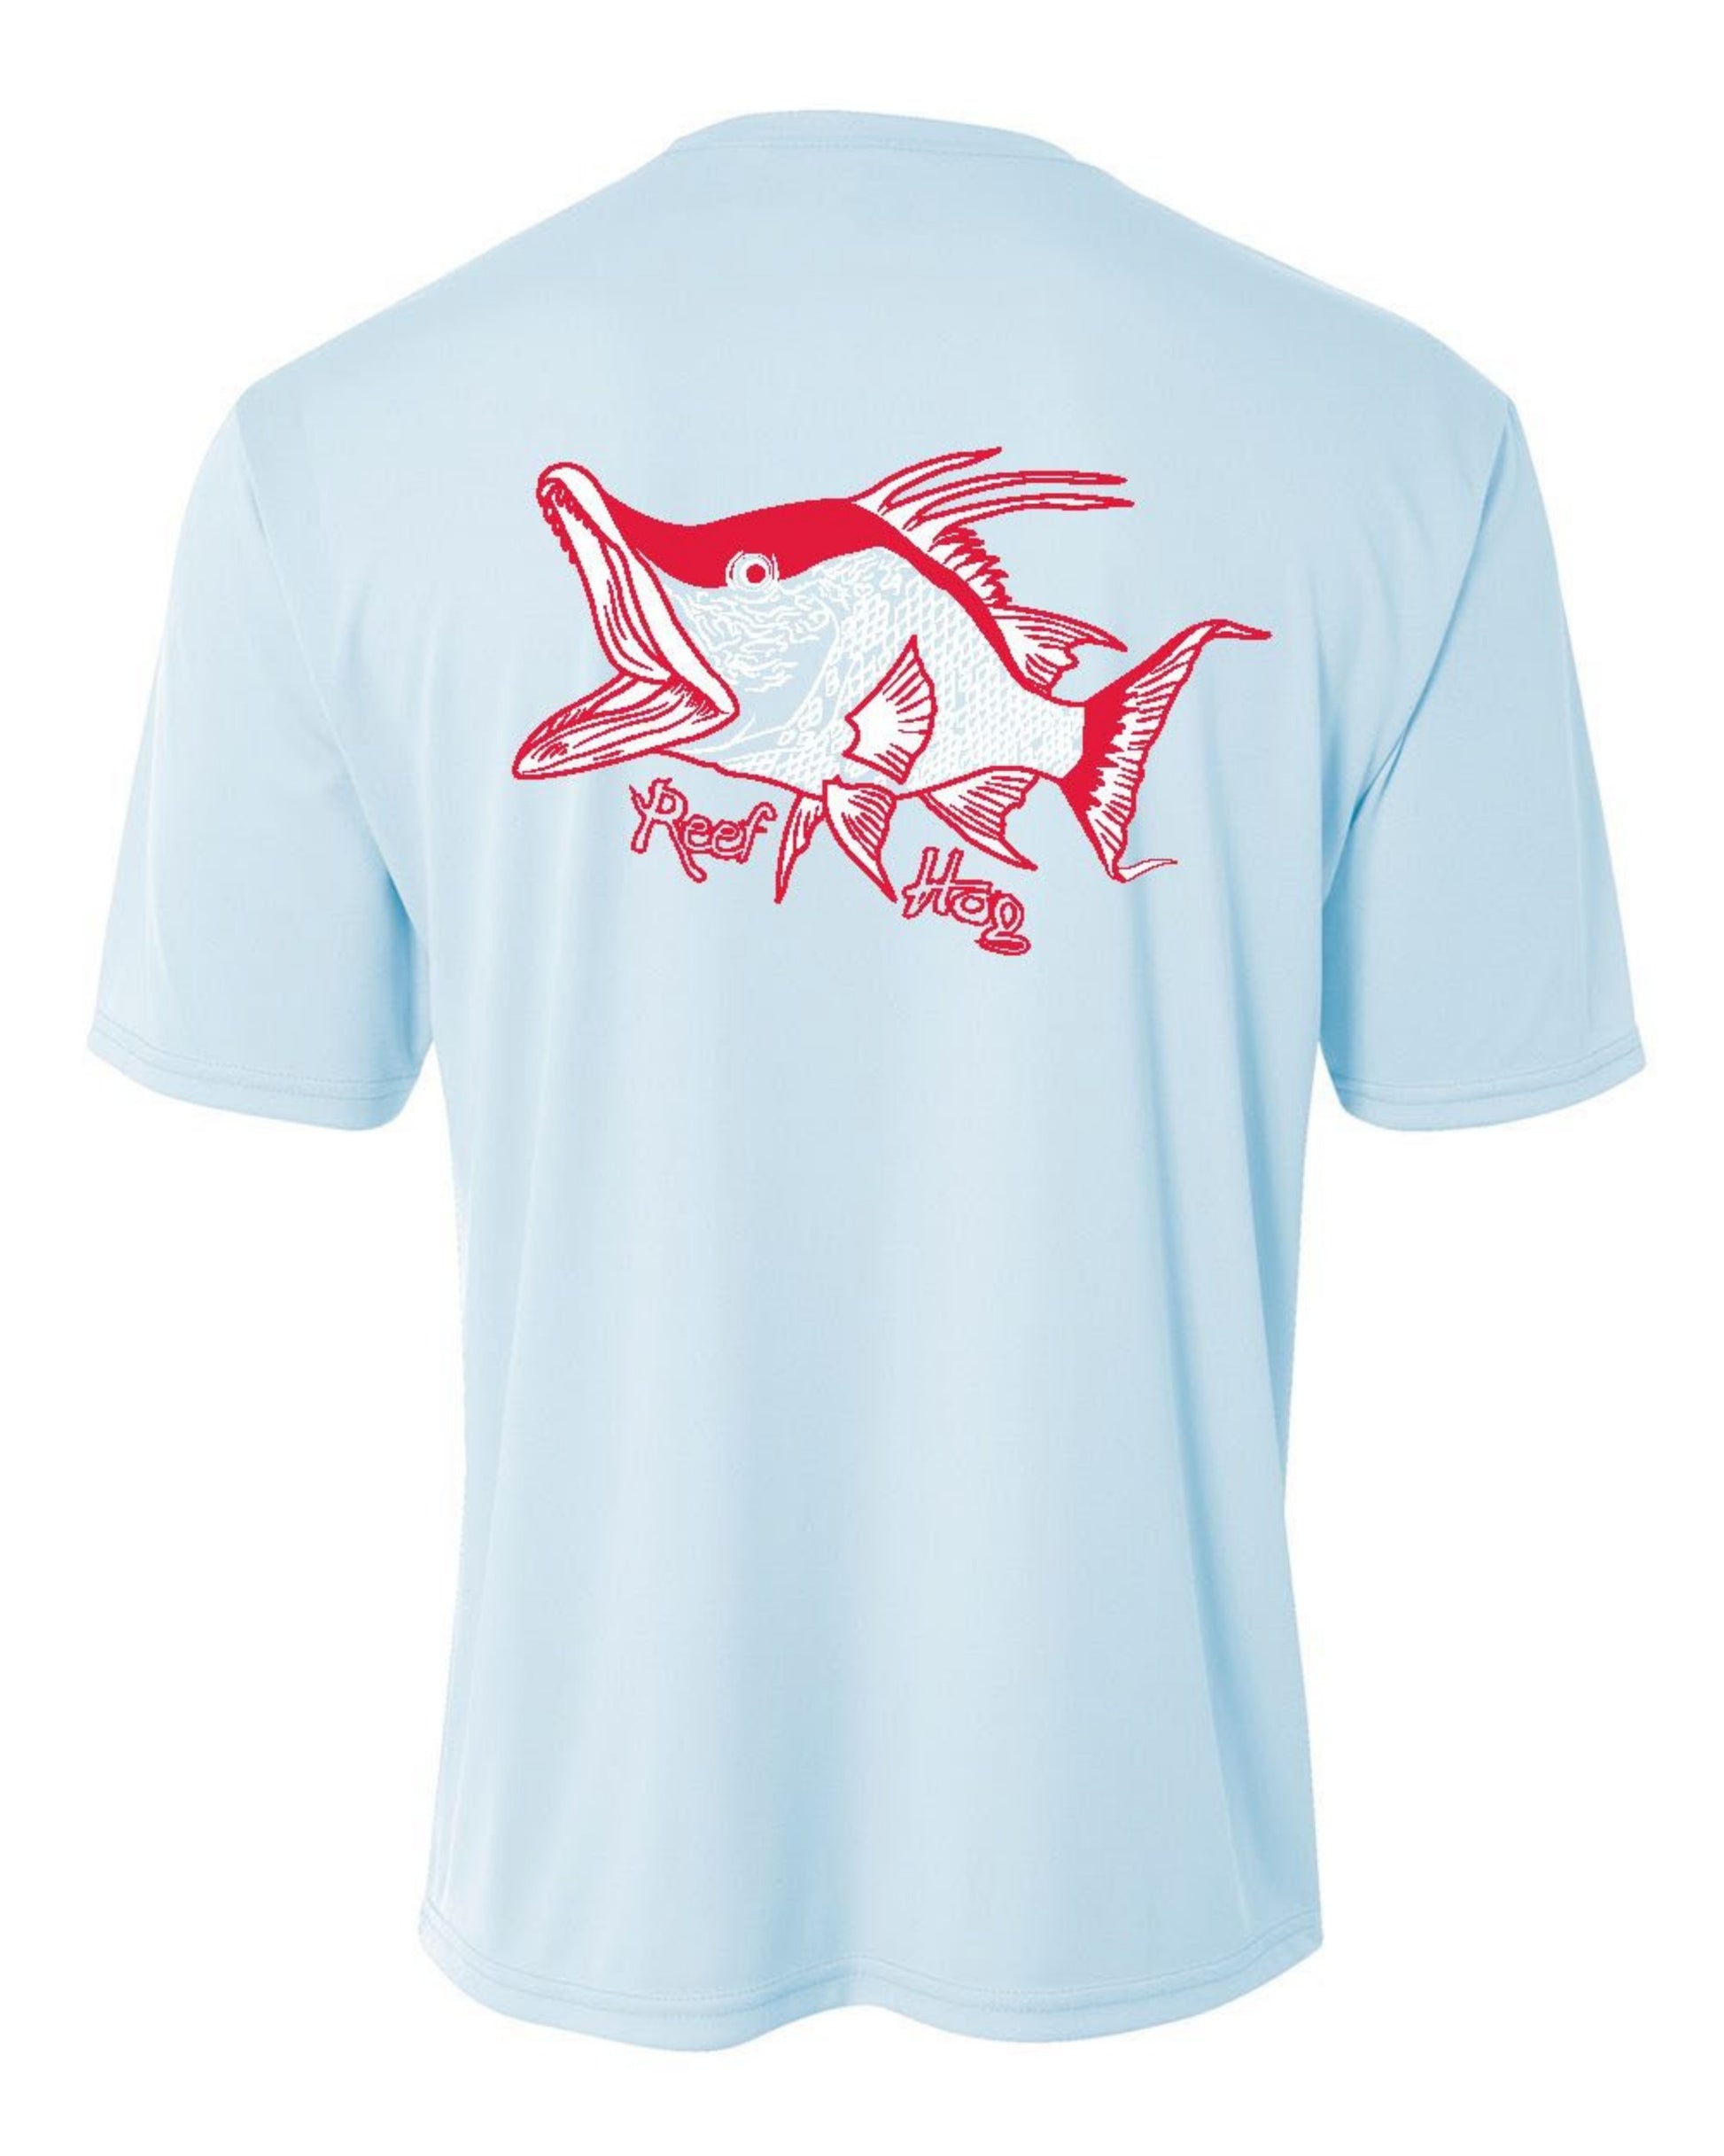 Youth Performance Fishing Shirts 50+uv Sun Protection -Reel Fishy Apparel M / LT Blue Hogfish S/S